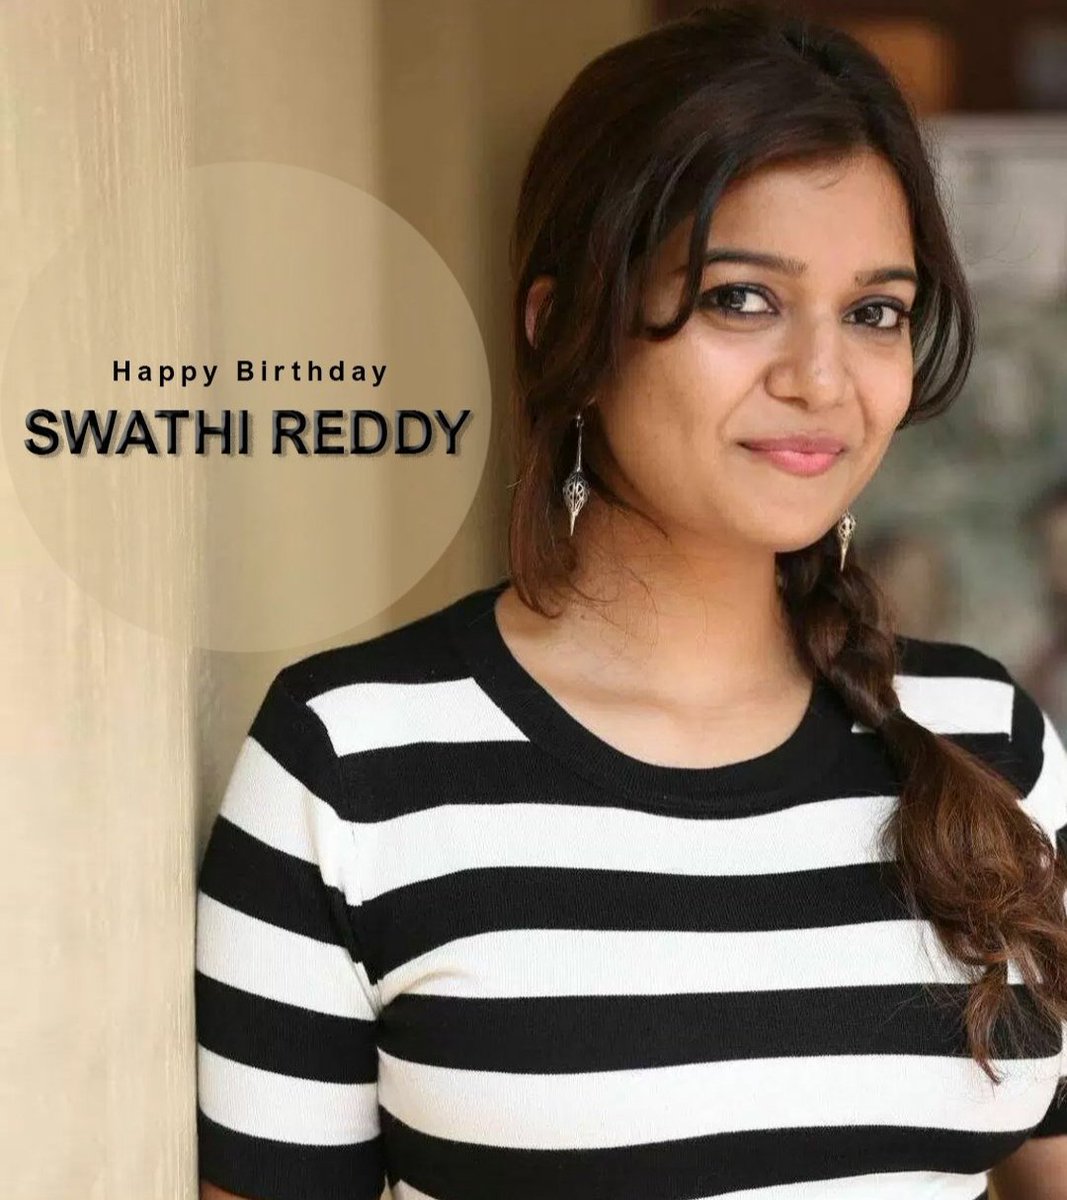 Wishing Actress #SwathiReddy a Very Happy Birthday 🎉

#HBDSwathiReddy #HappyBirthdaySwathiReddy